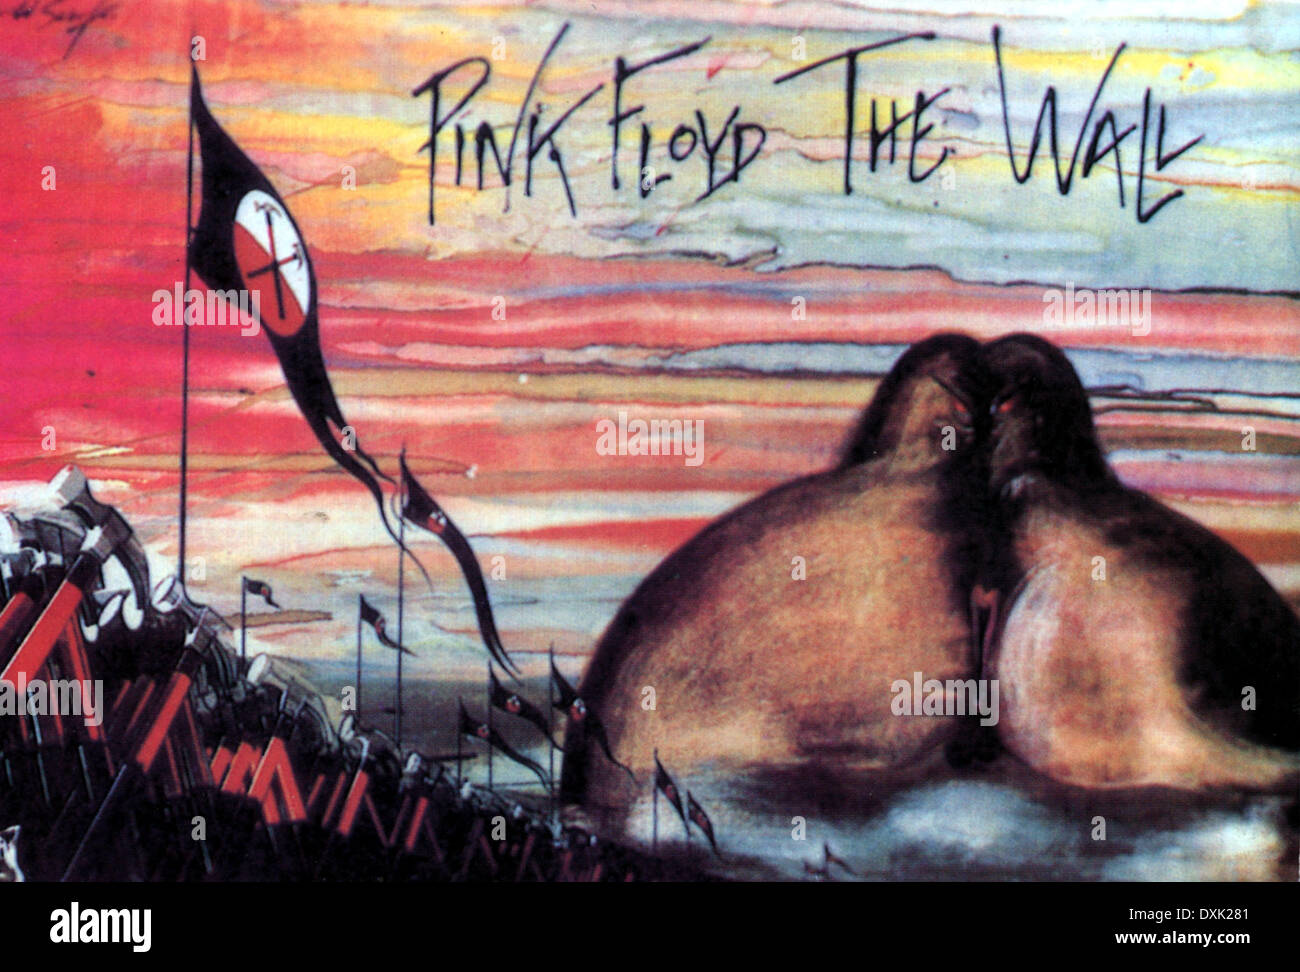 PINK FLOYD THE WALL (BR1982) Foto de stock